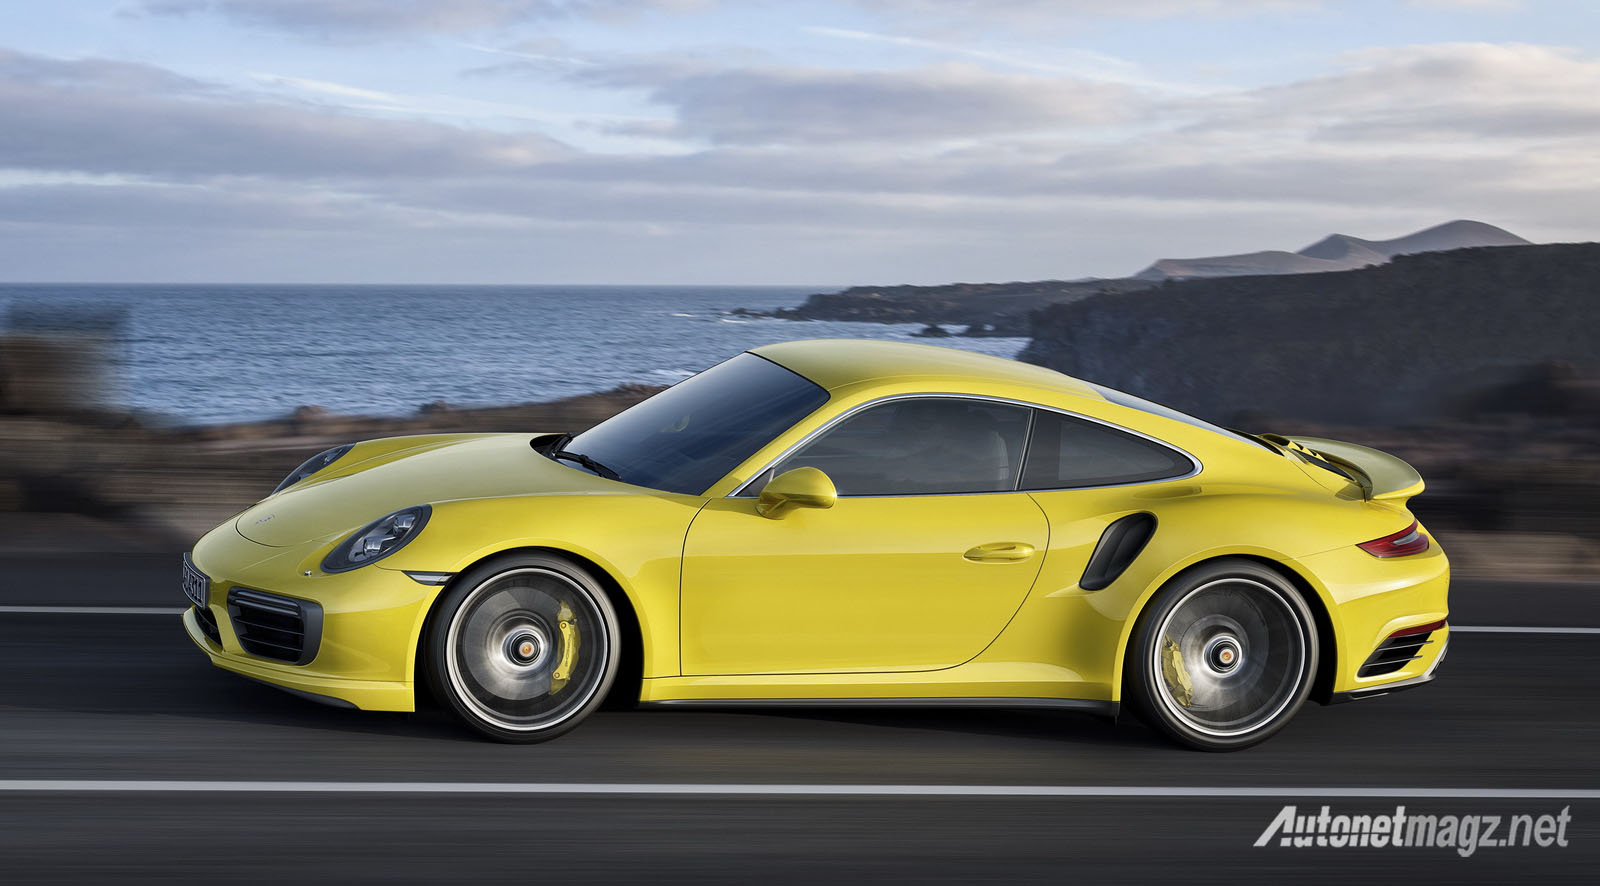 International, : Ini Dia Tampilan Baru Porsche 911 Turbo dan 911 Turbo S!